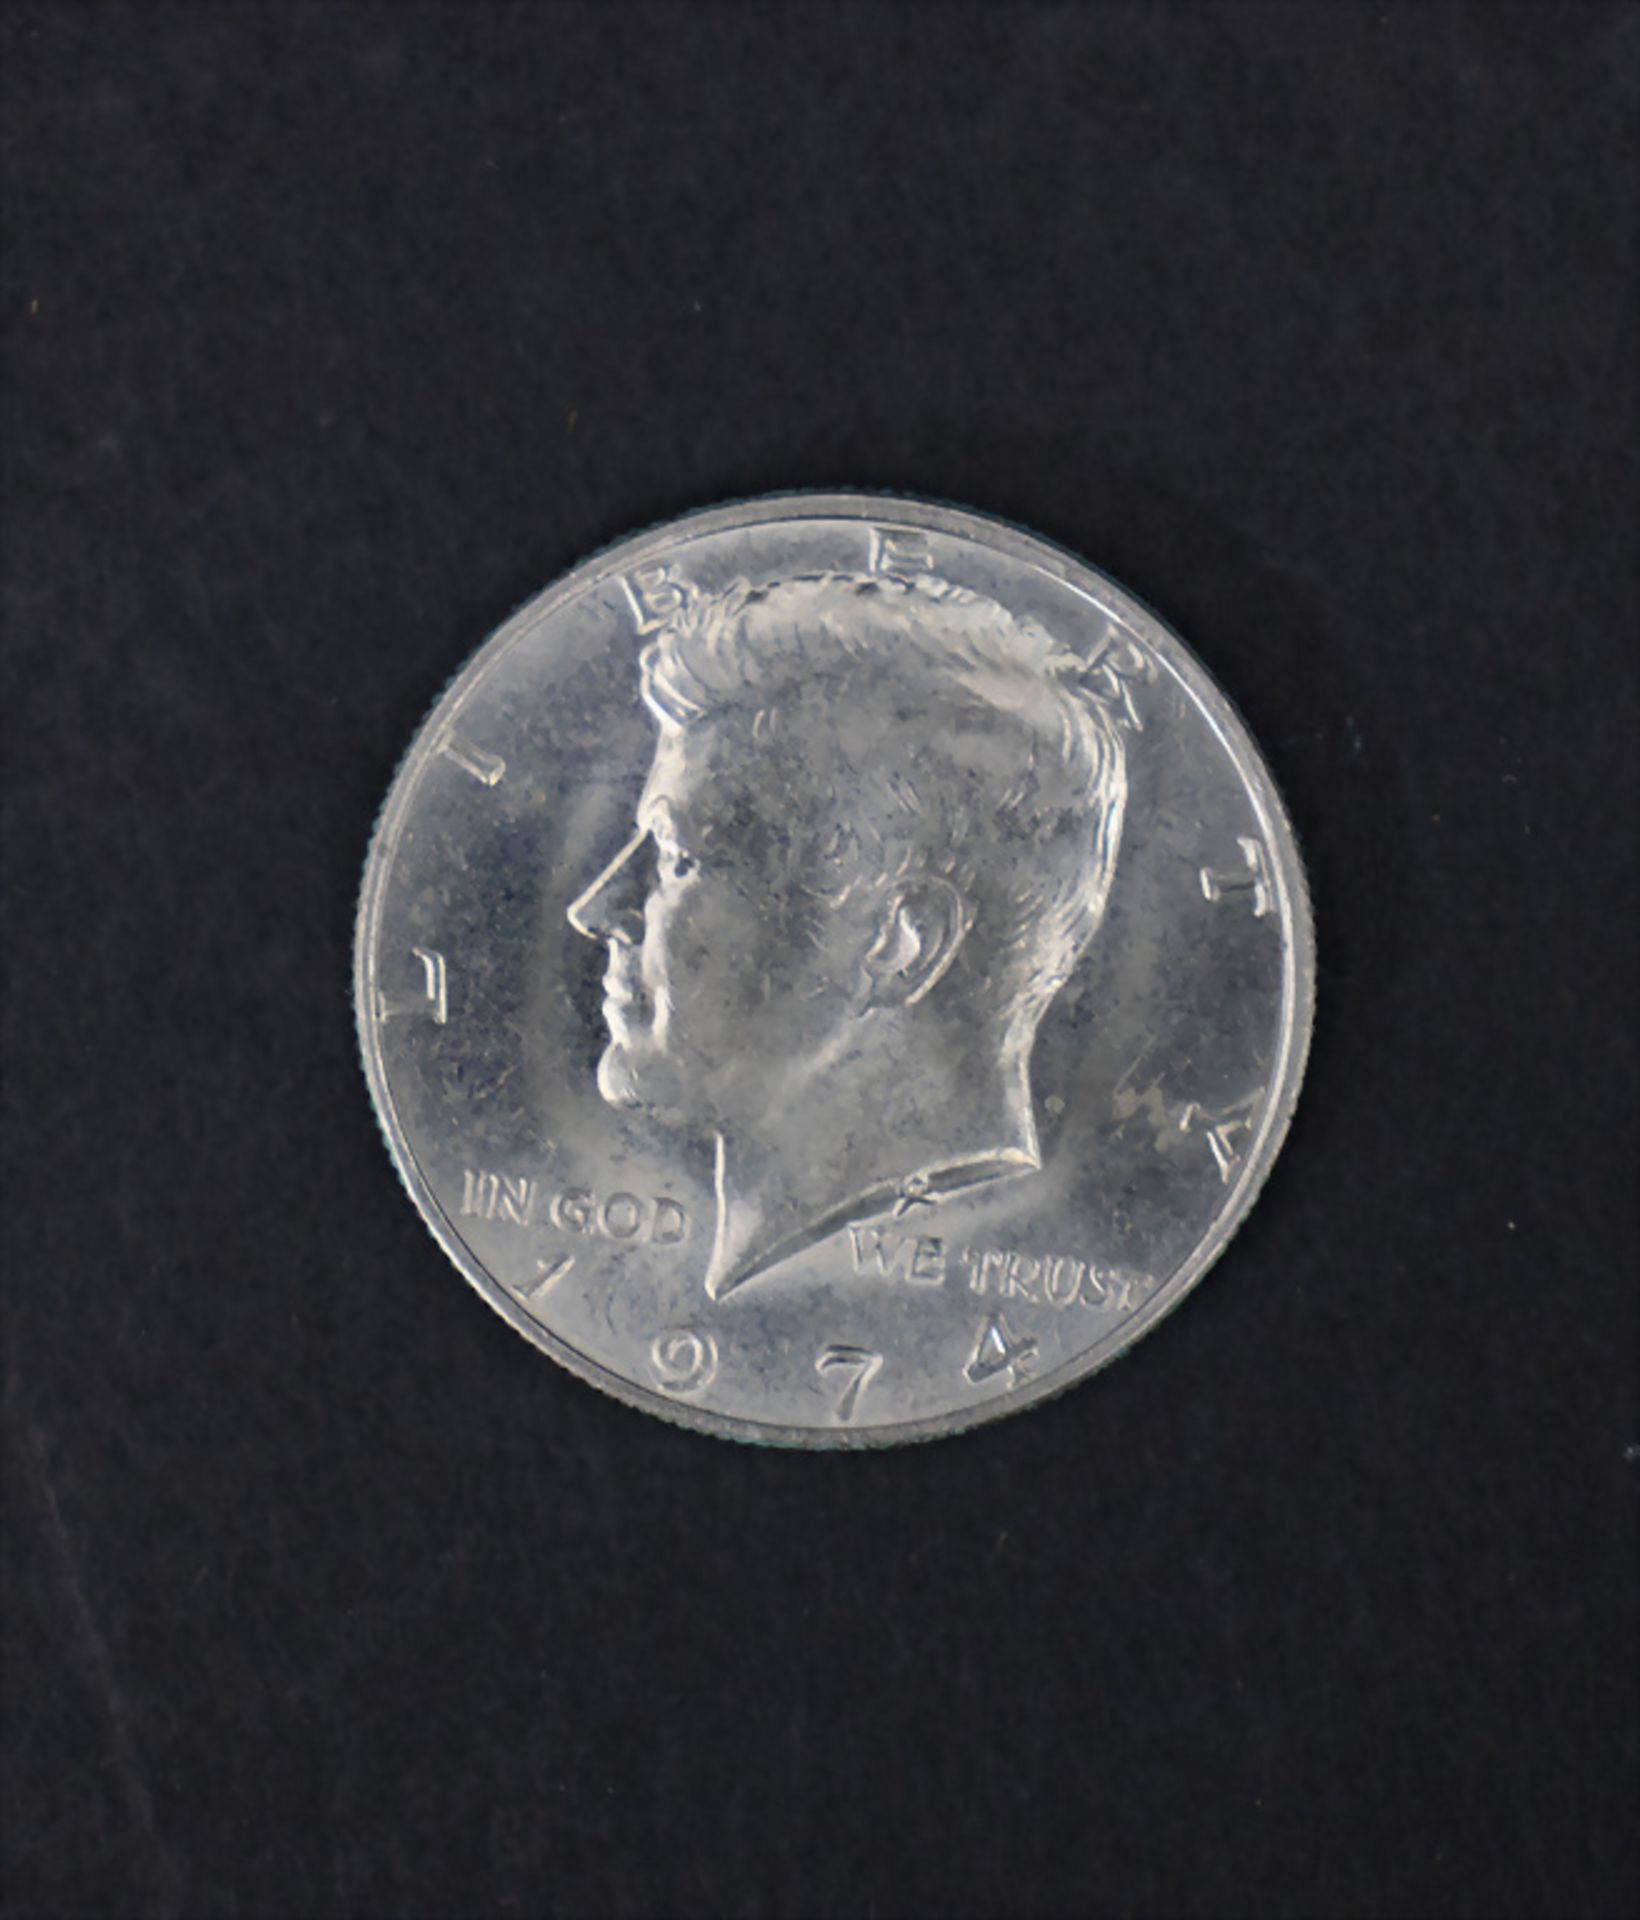 Sammlung Münzen 'USA' / A collection of US coins - Image 4 of 9